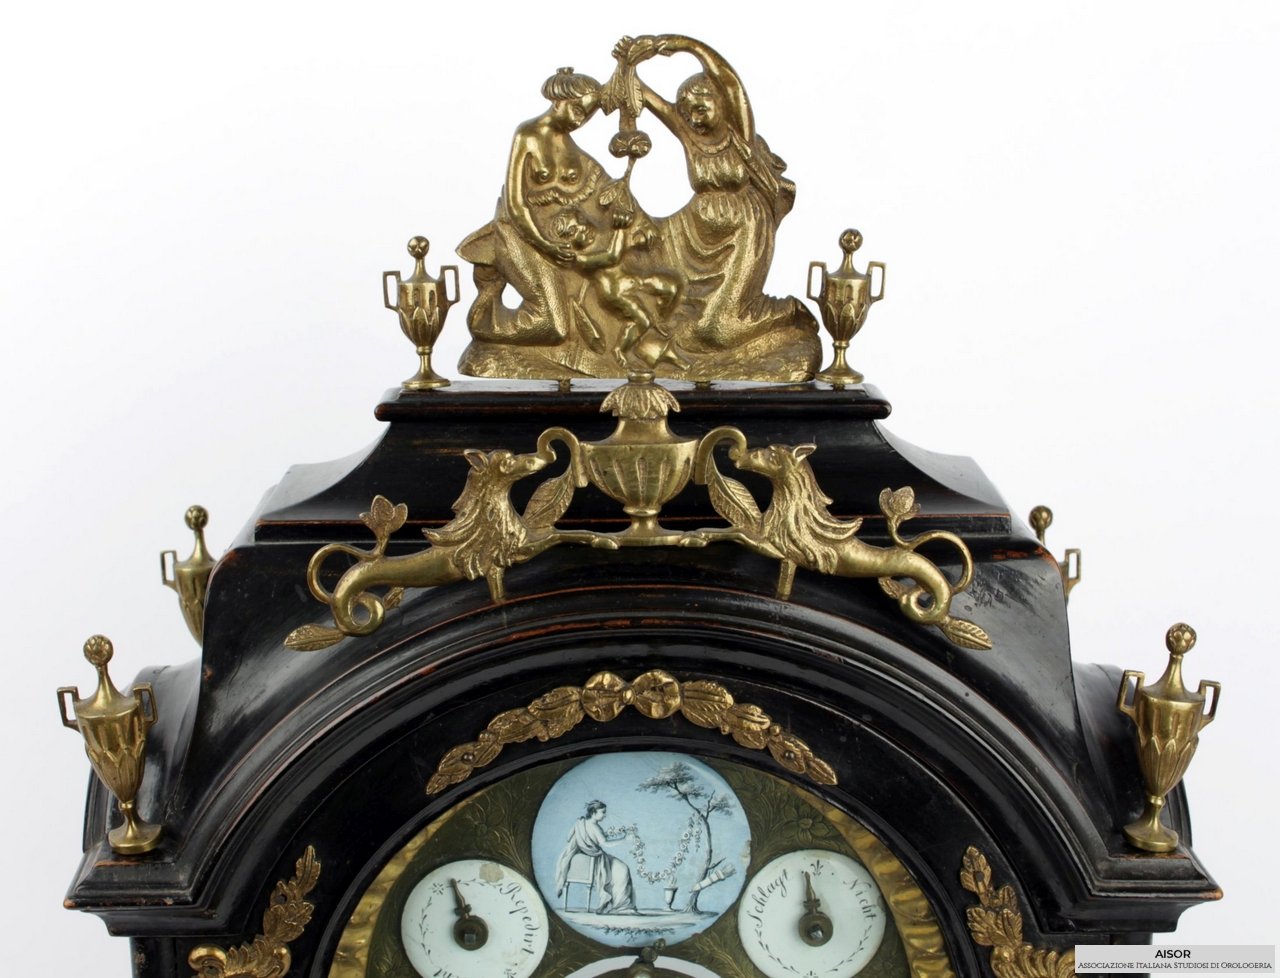 AISOR - orologio a pendolo praga 1770 - 01.JPG